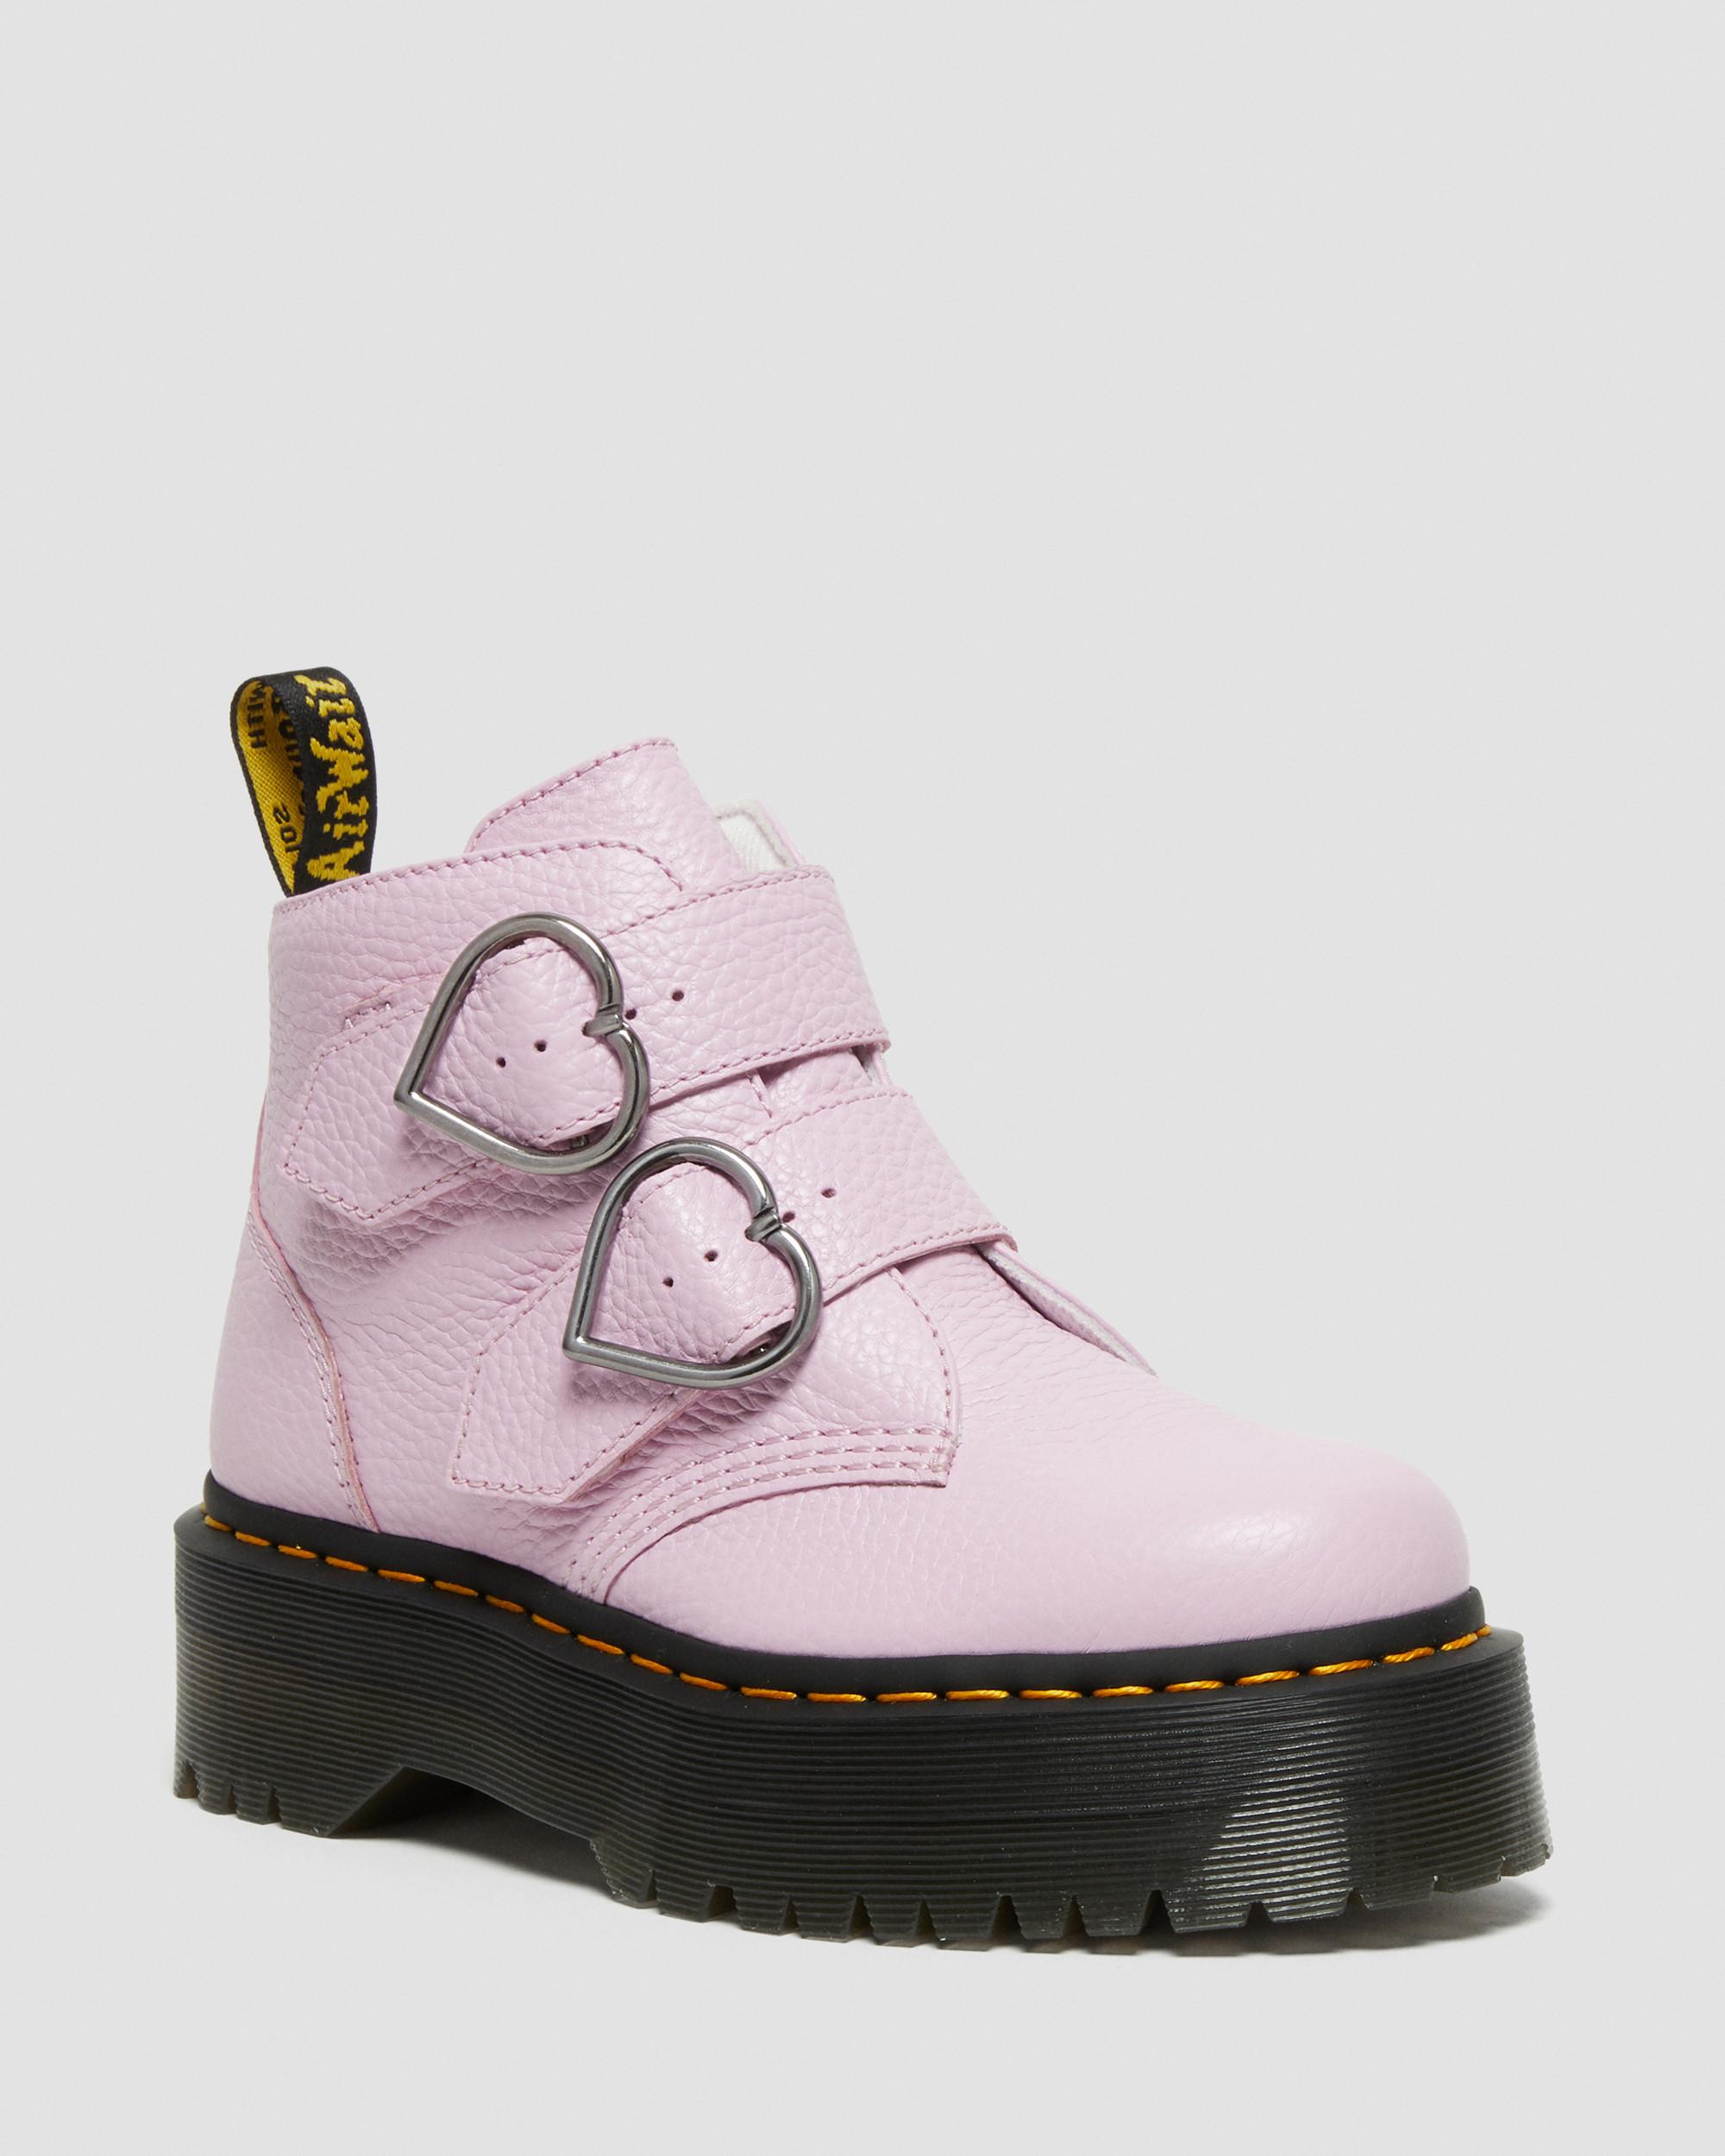 Devon Heart Leather Platform Boots in Pink | Dr. Martens